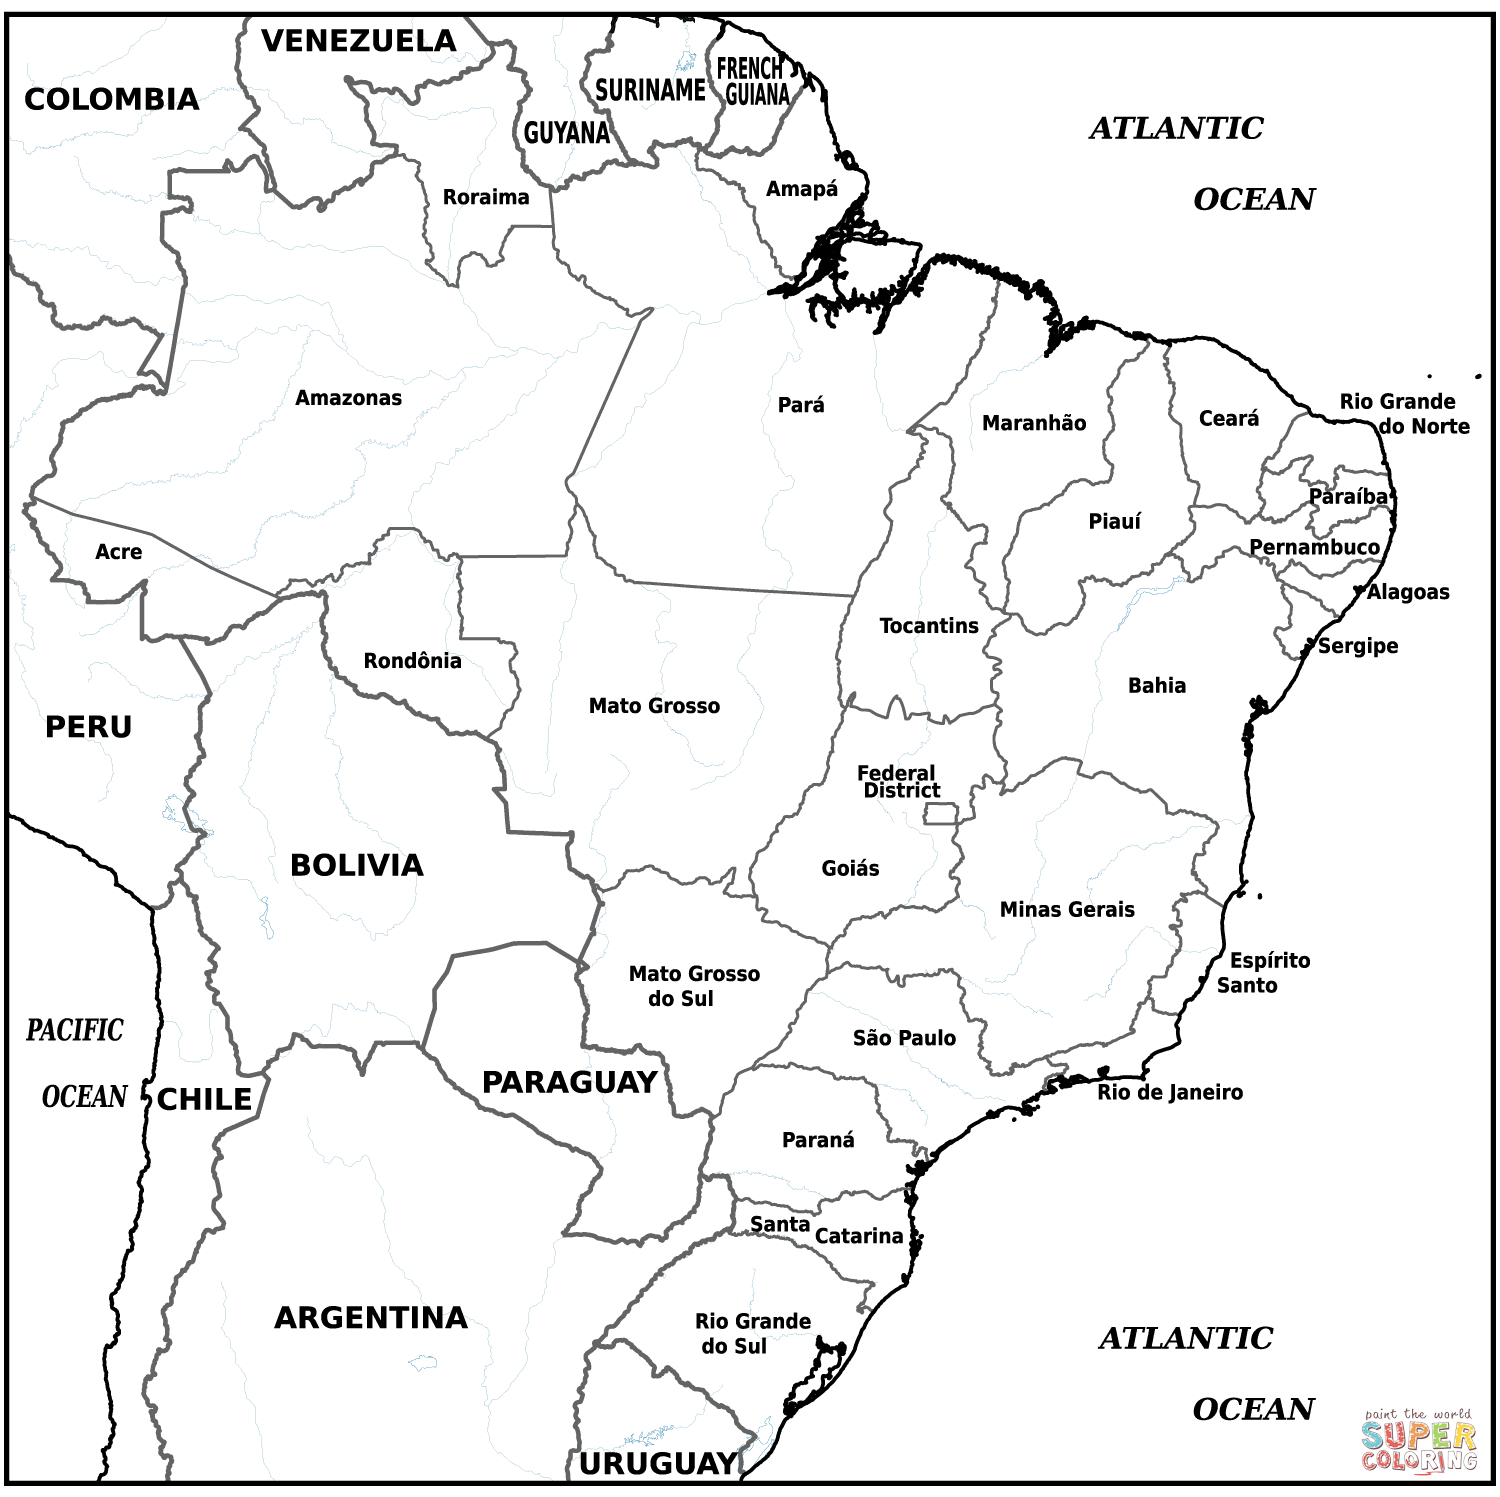 Brazilian Map Coloring Page | Free Printable Coloring Pages - Free Printable Map Of Brazil